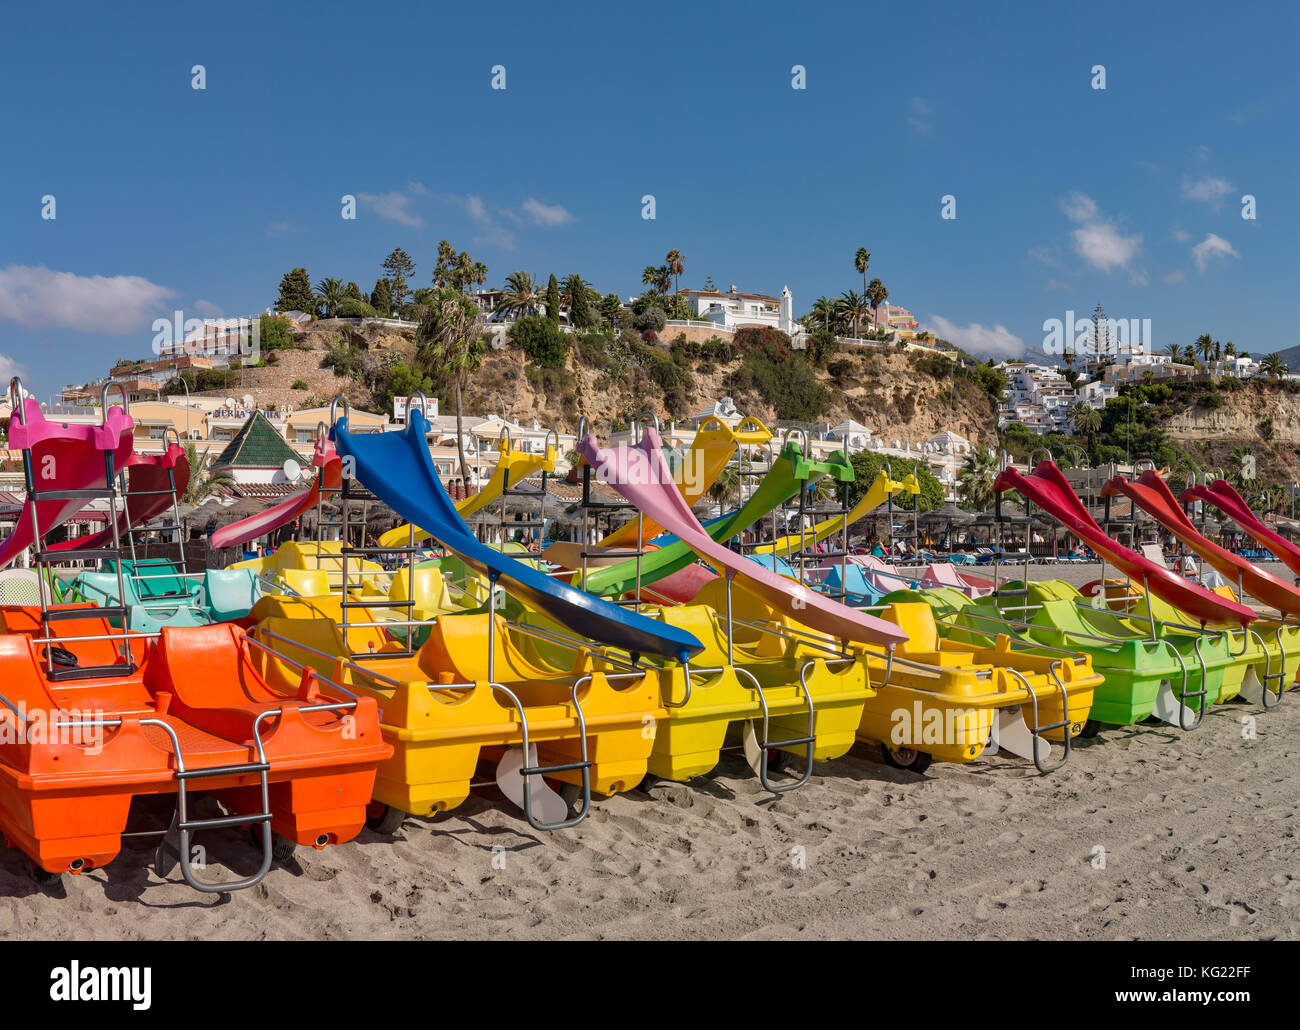 Pedal boats at the Burriana beach, Spain *** Local Caption *** landscape,  summer, beach, mountains, coast Stock Photo - Alamy